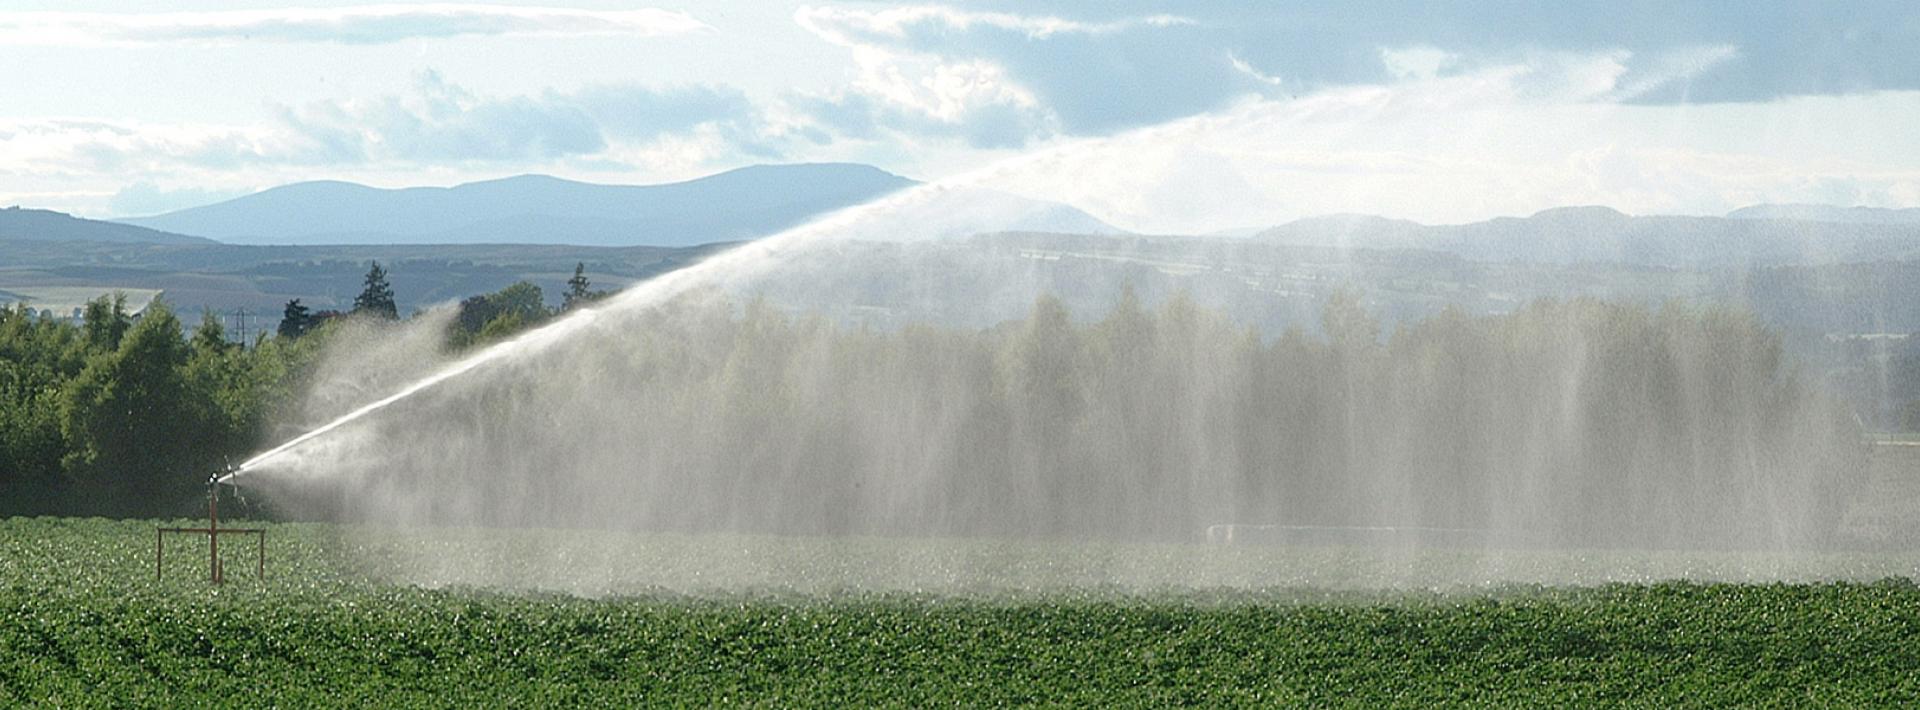 Image showing irrigation sprayer